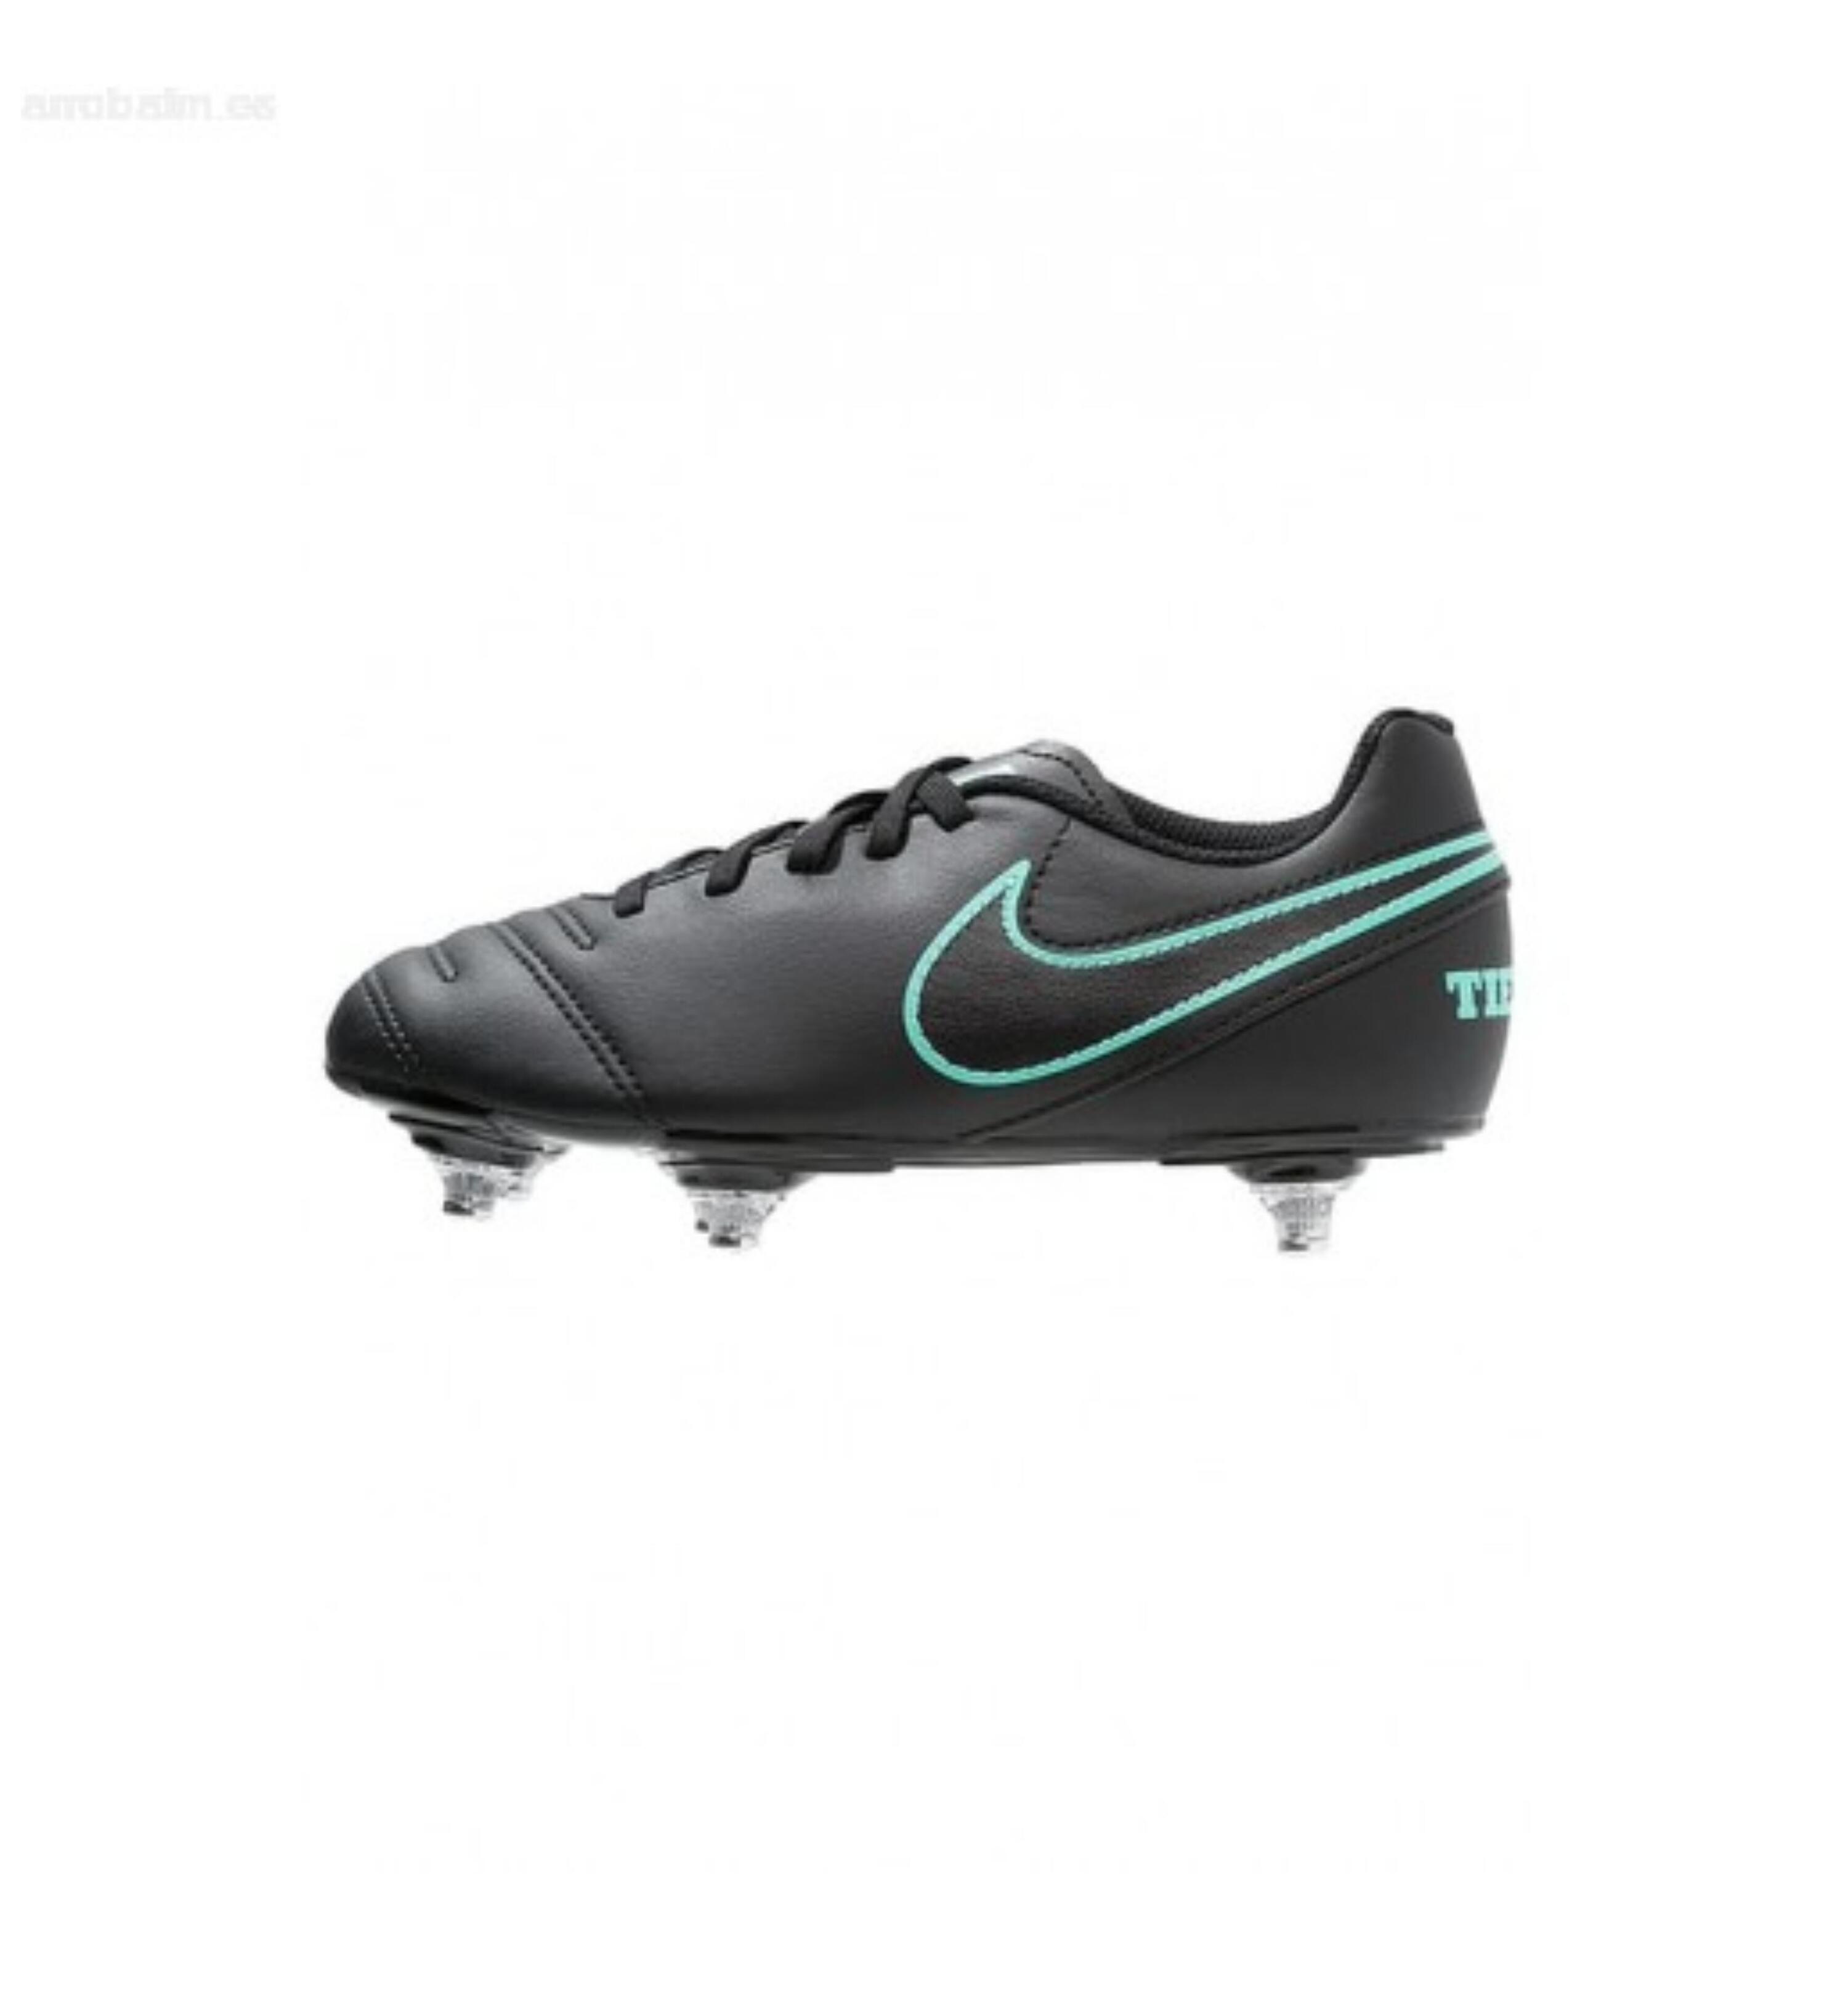 NIKE Tiempo Rio SG Kids' Football Boots - Black/Green